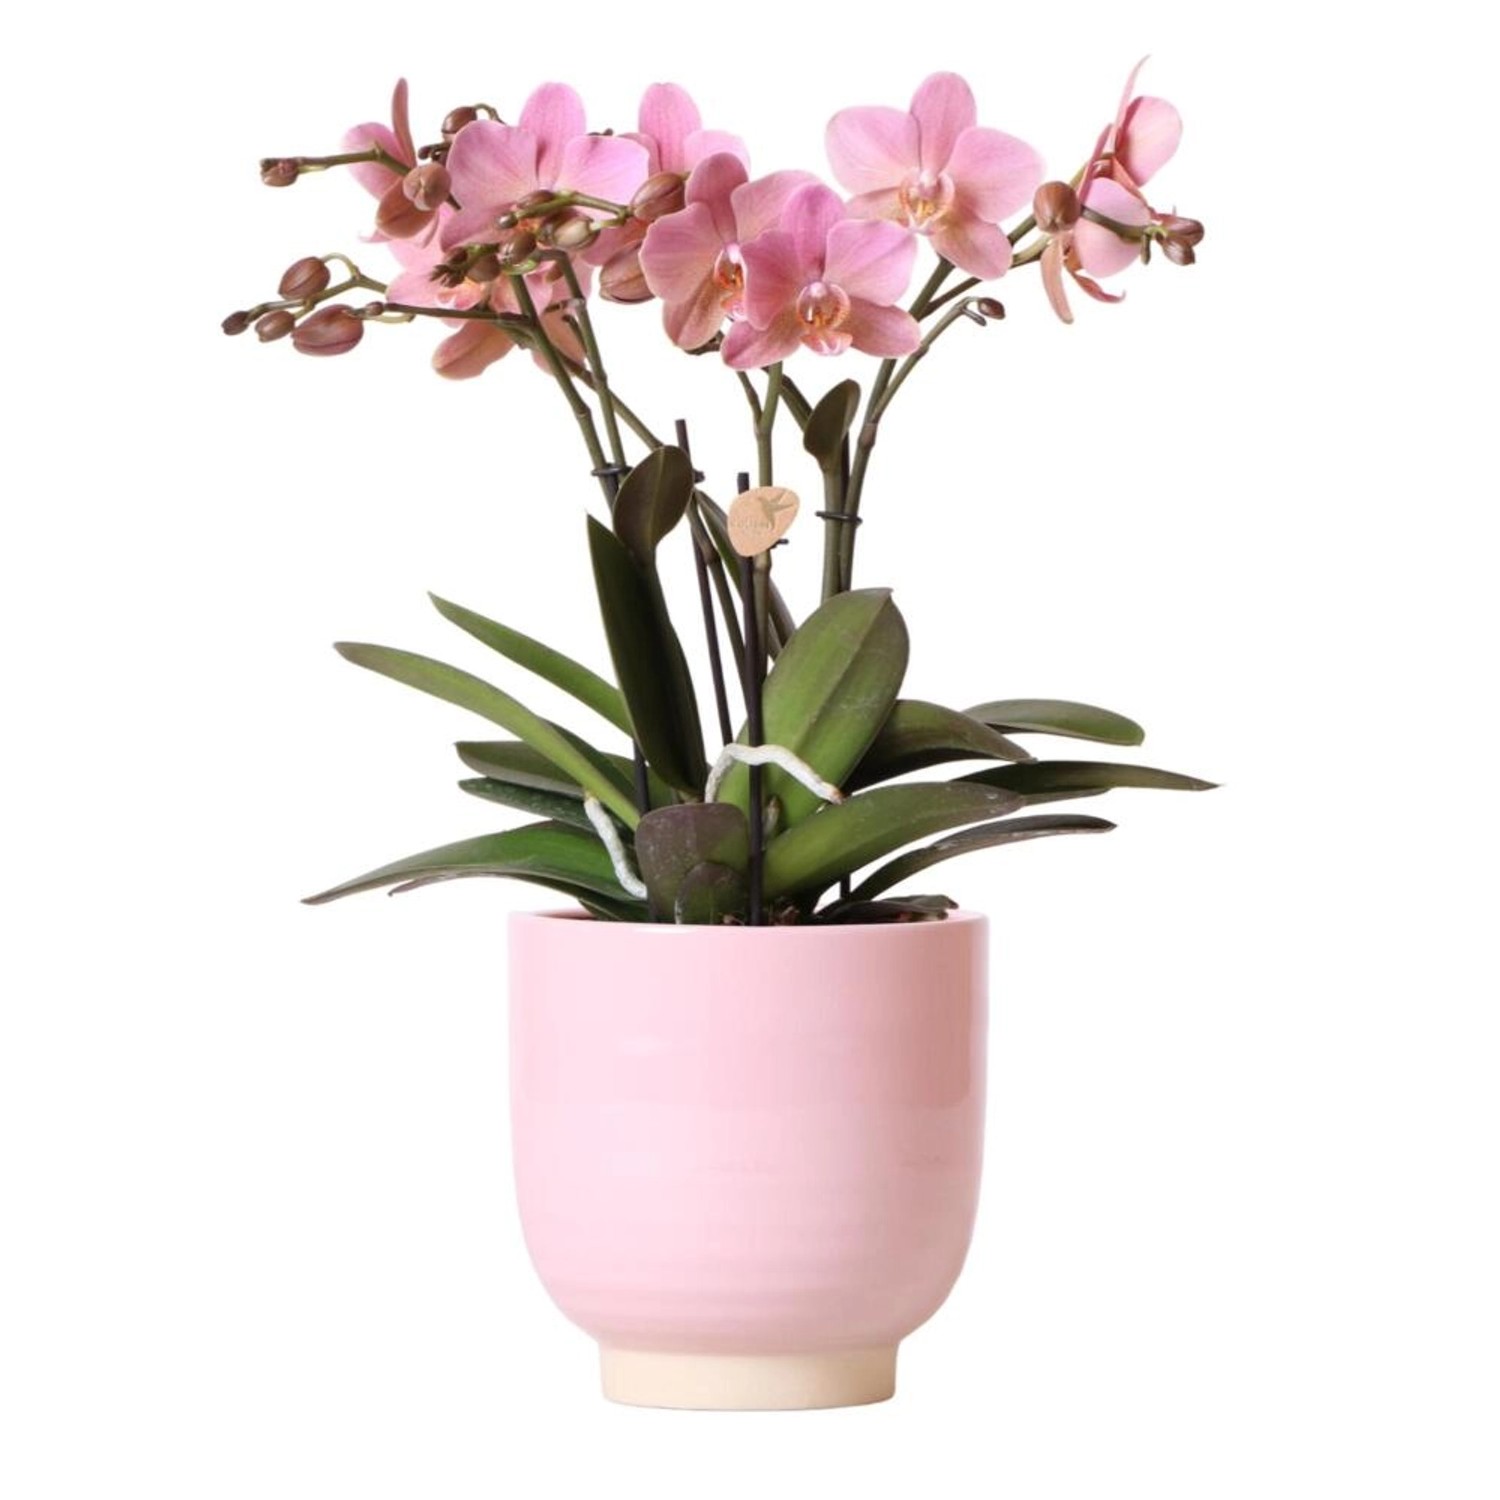 Kolibri Orchids AltRosa Phalaenopsis Orchidee Jewel Treviso in Rosa glasier günstig online kaufen